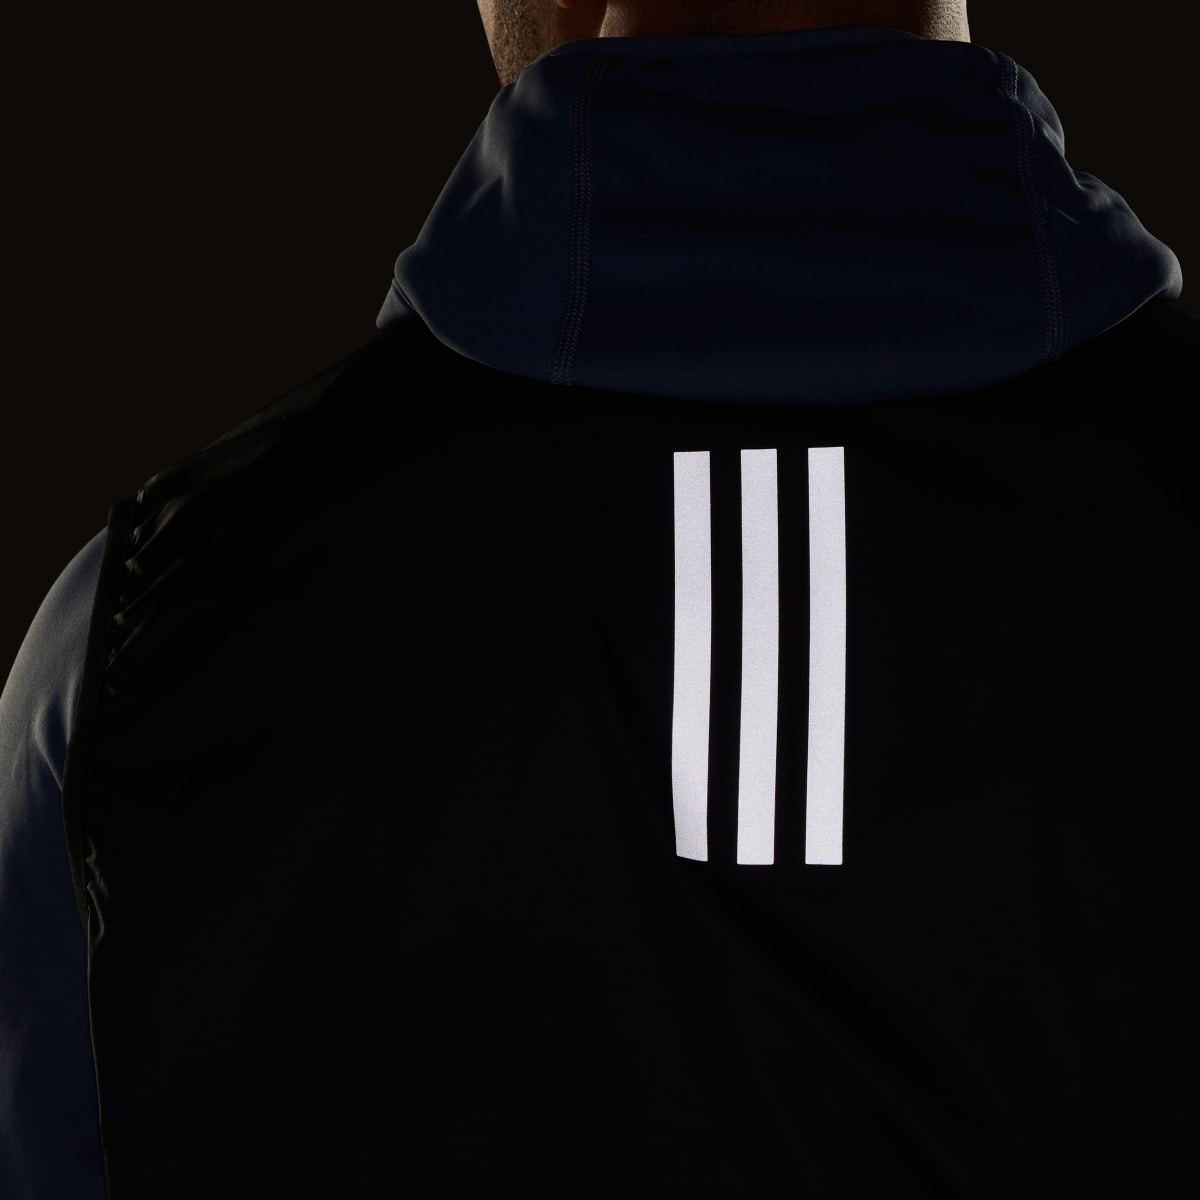 Adidas Own the Run Vest. 8